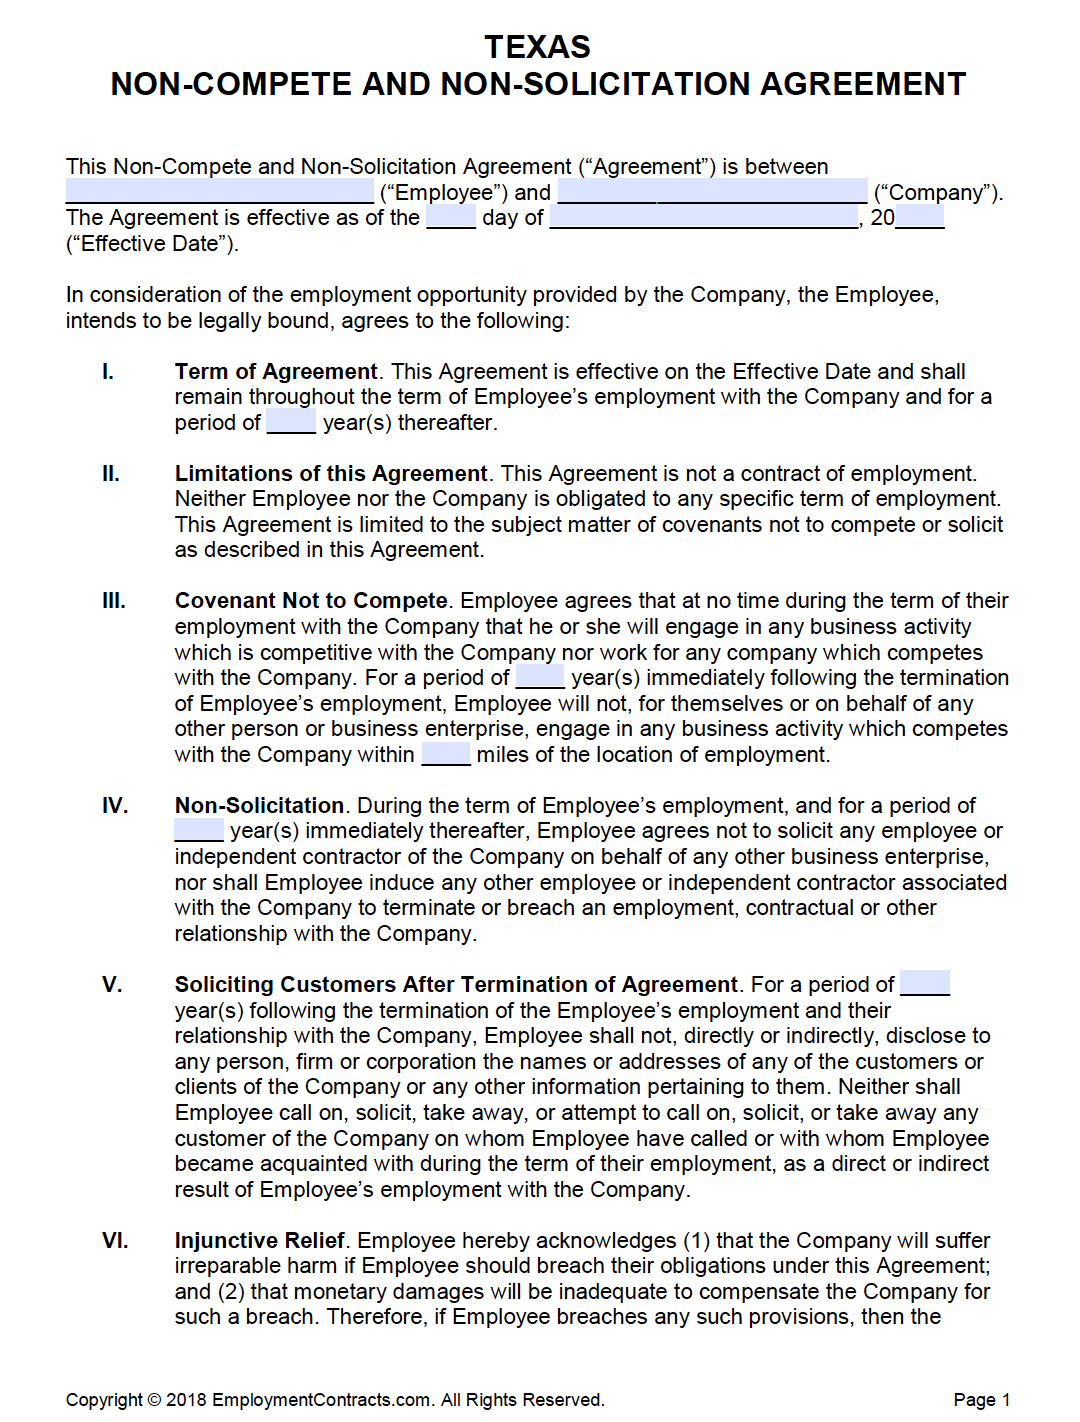 texas-non-compete-non-solicitation-agreement-pdf-word